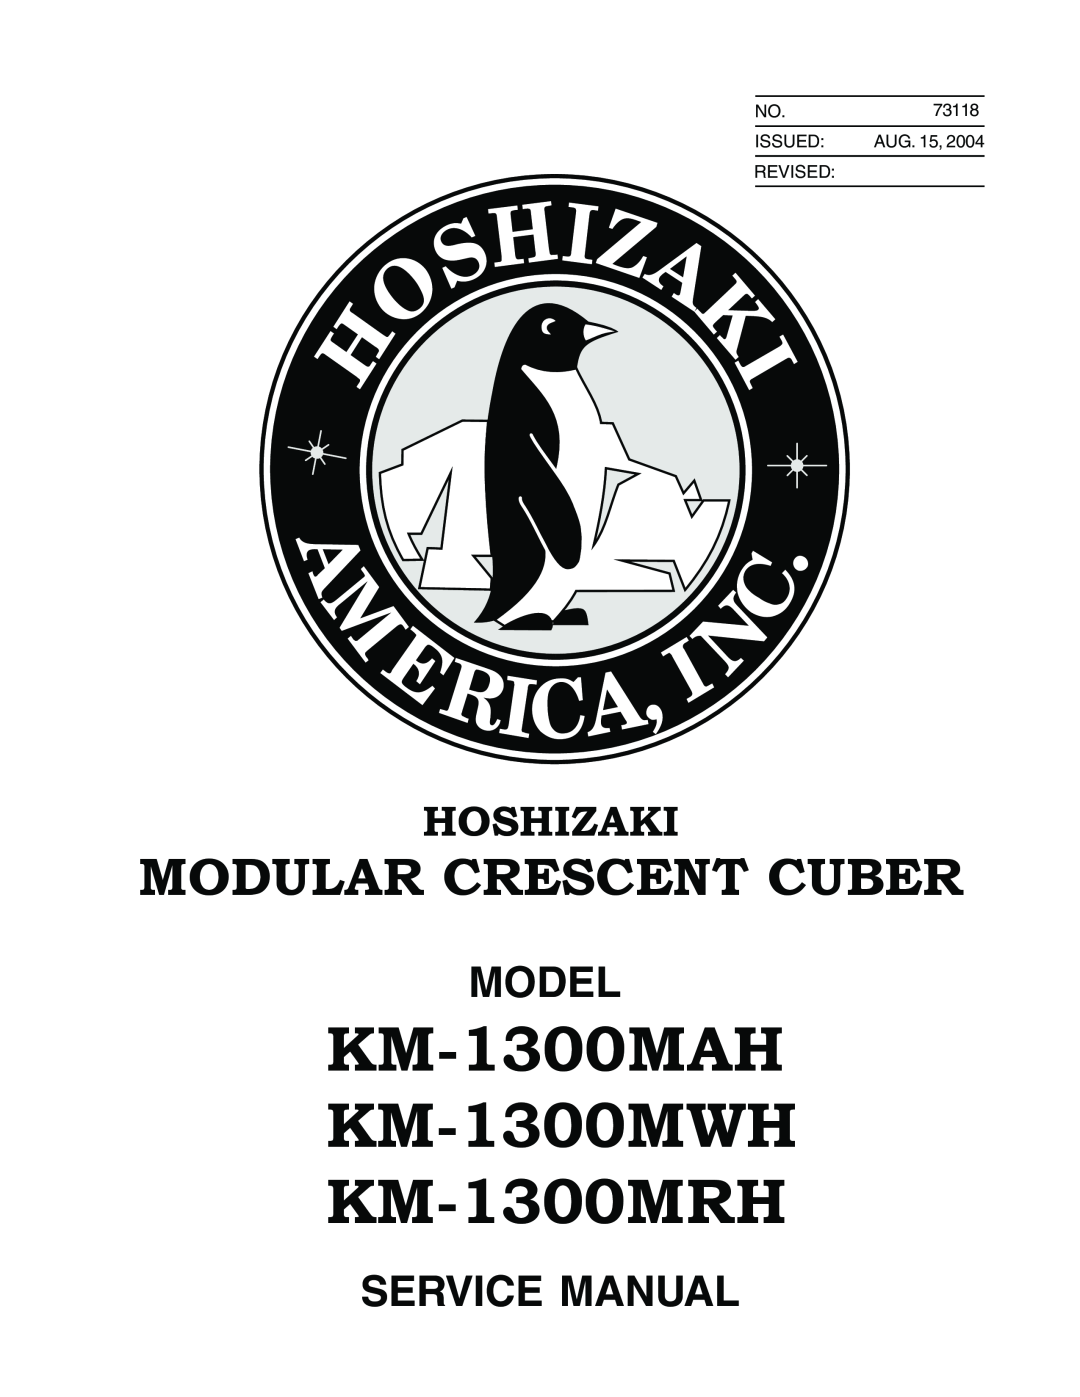 Hoshizaki service manual KM-1300MAH KM-1300MWH KM-1300MRH, Modular Crescent Cuber, Hoshizaki, Model, Aug 